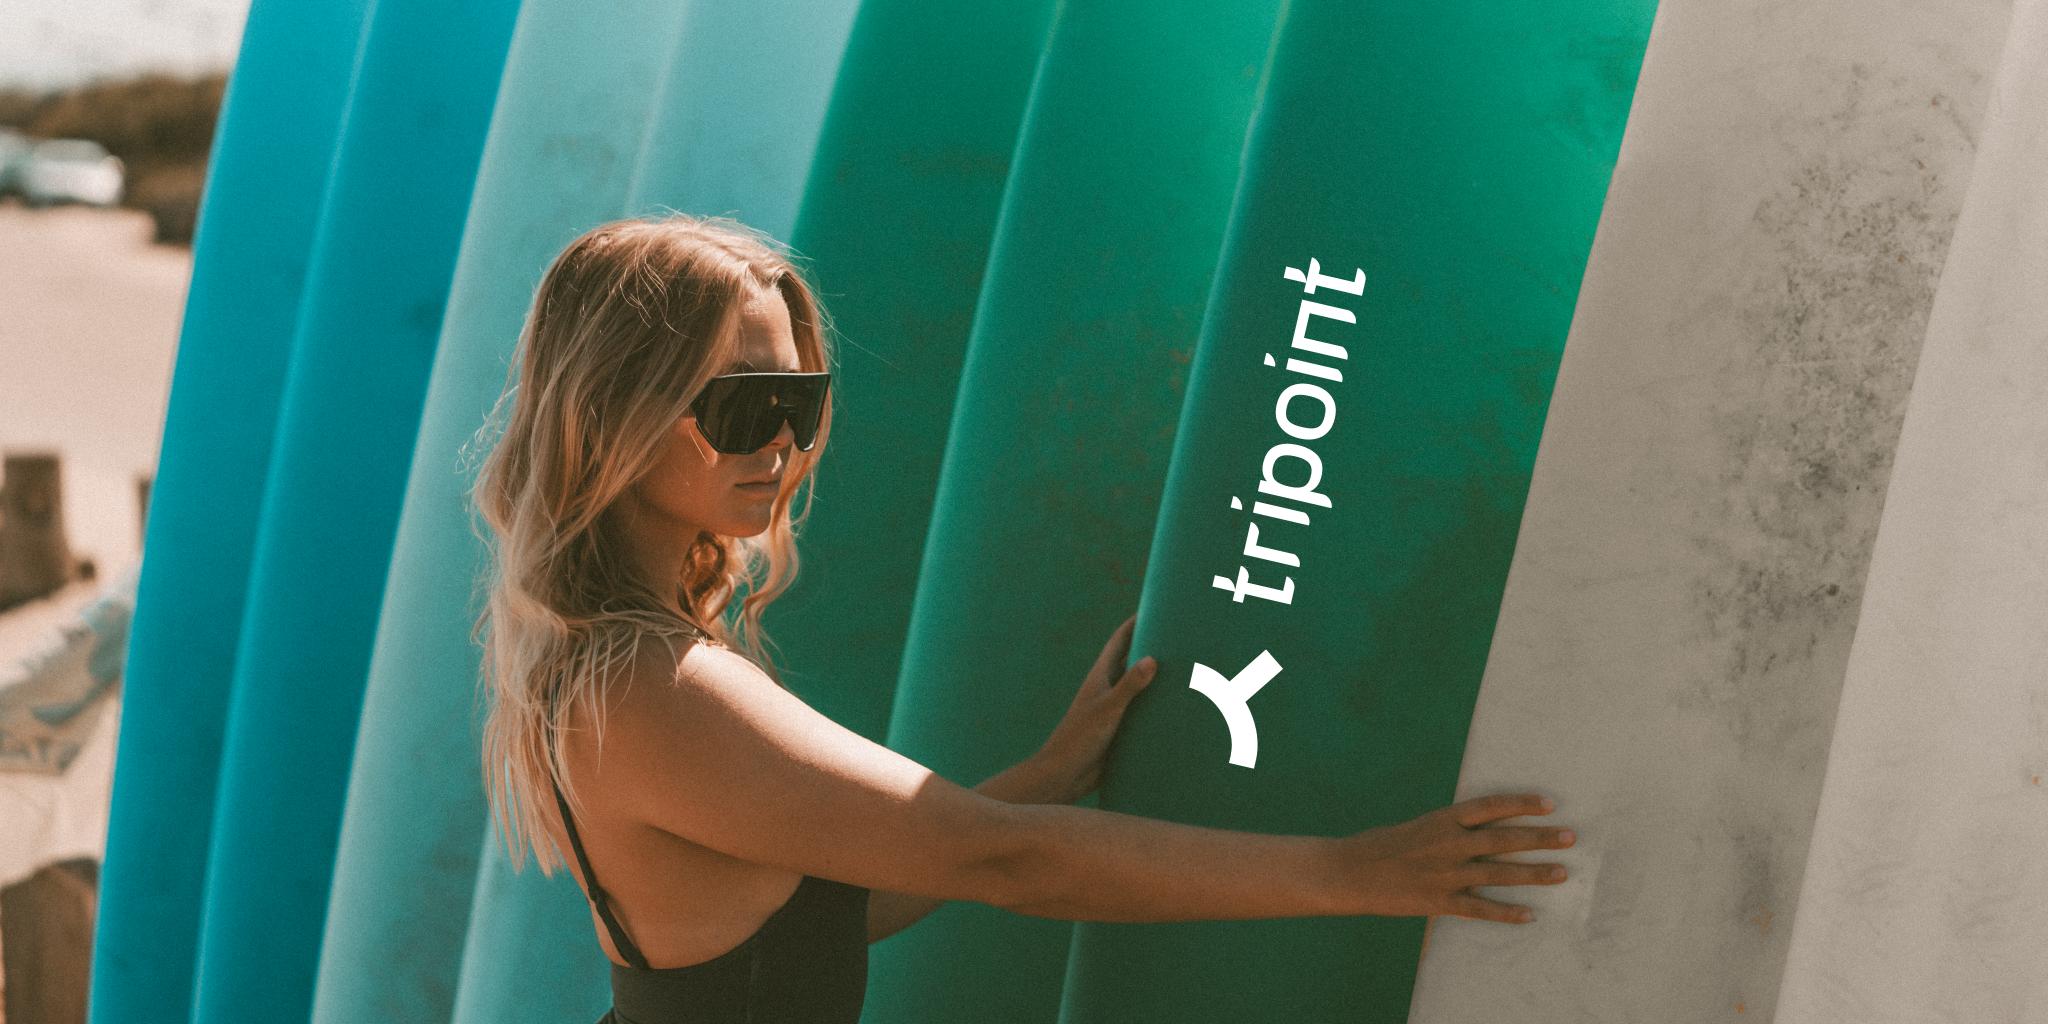 Tripoint Surfboard (E-pood)